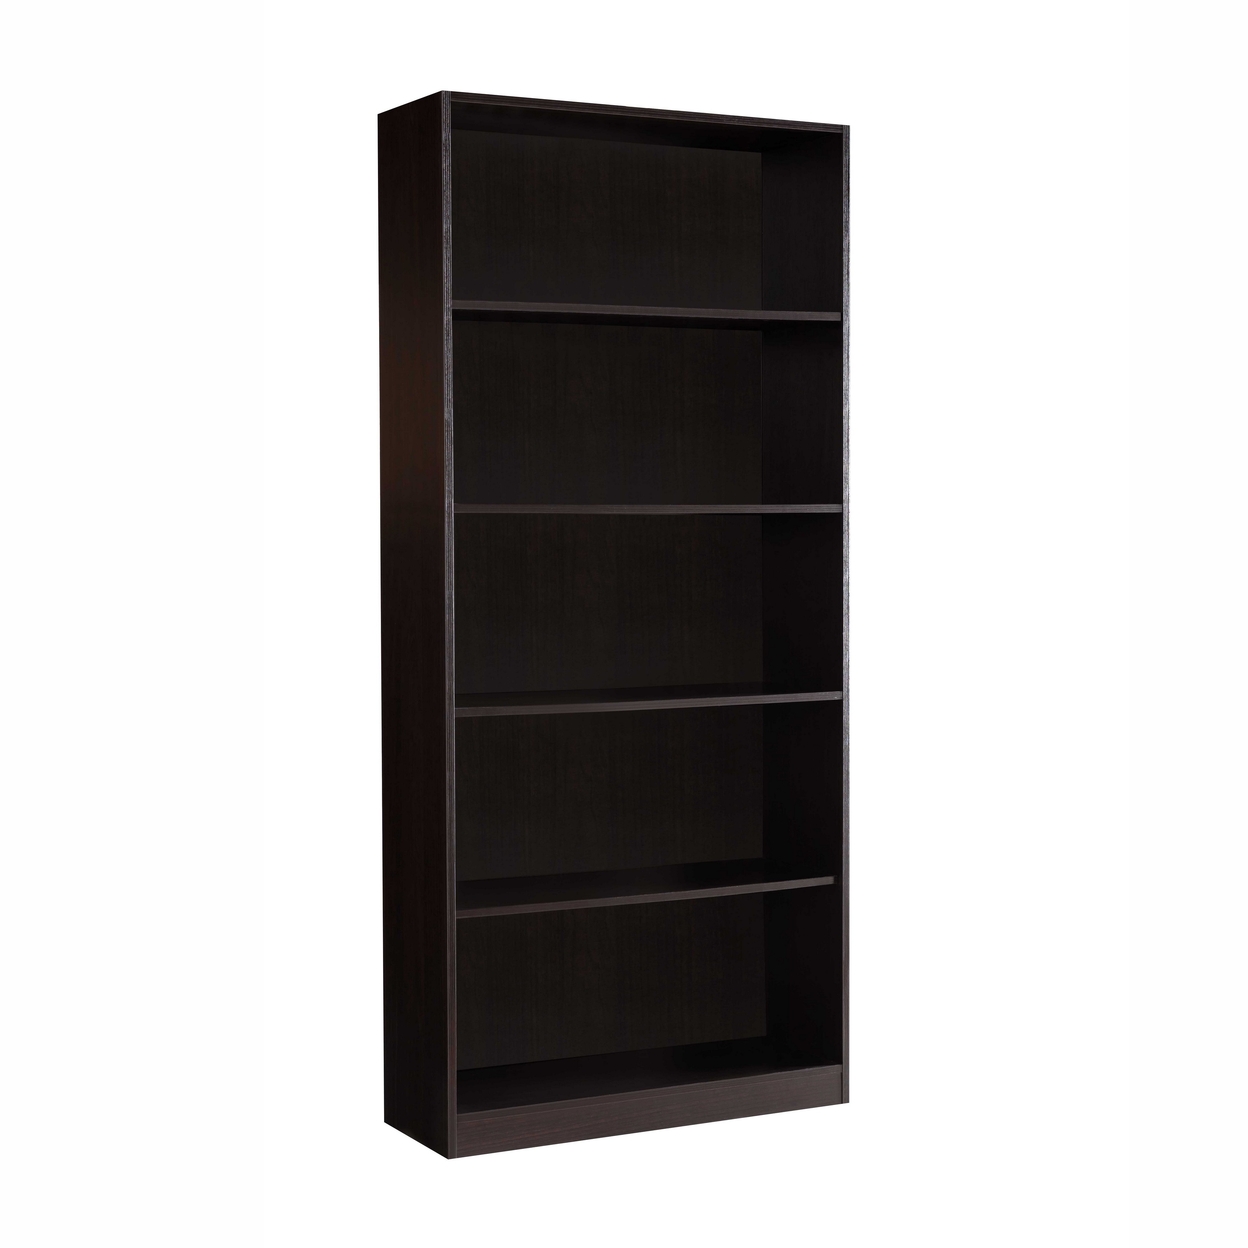 Spacious Dark Brown Finish Bookcase With 5 Open Shelves.- Saltoro Sherpi